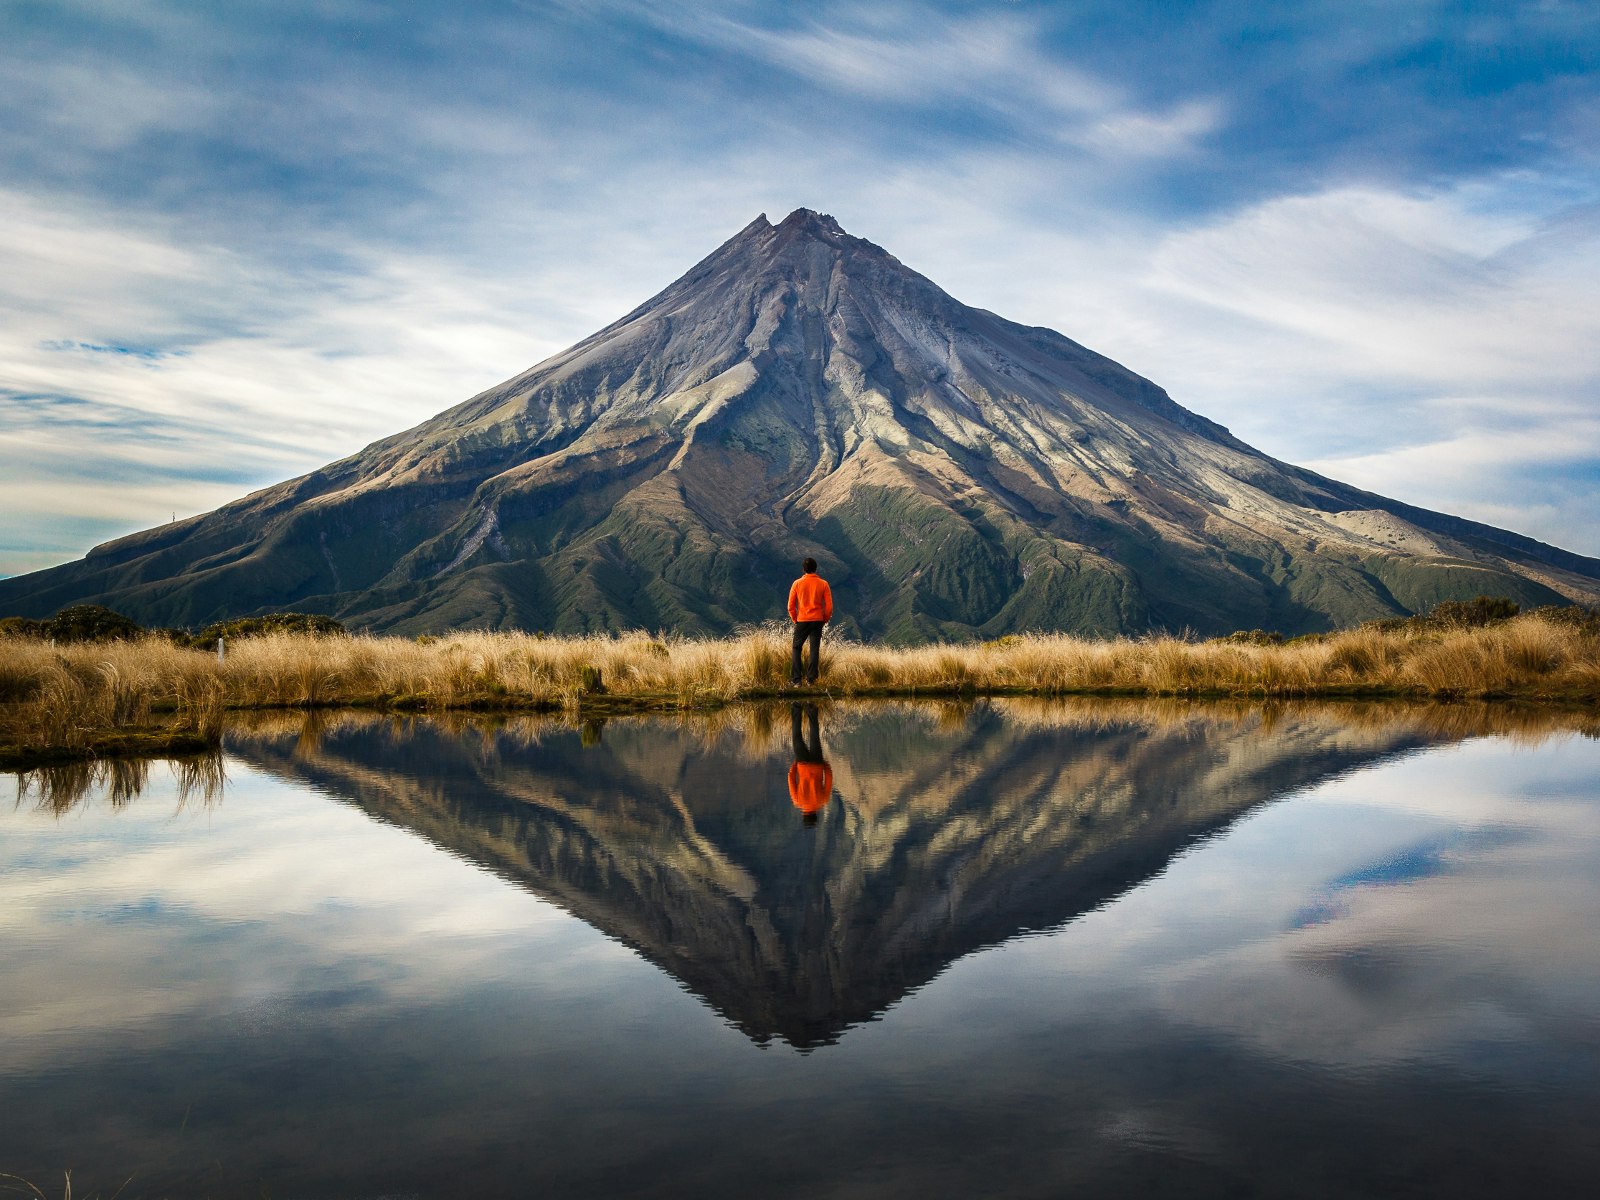 A mountaineer looking at the Taranaki volcano in the north island of New Zealand